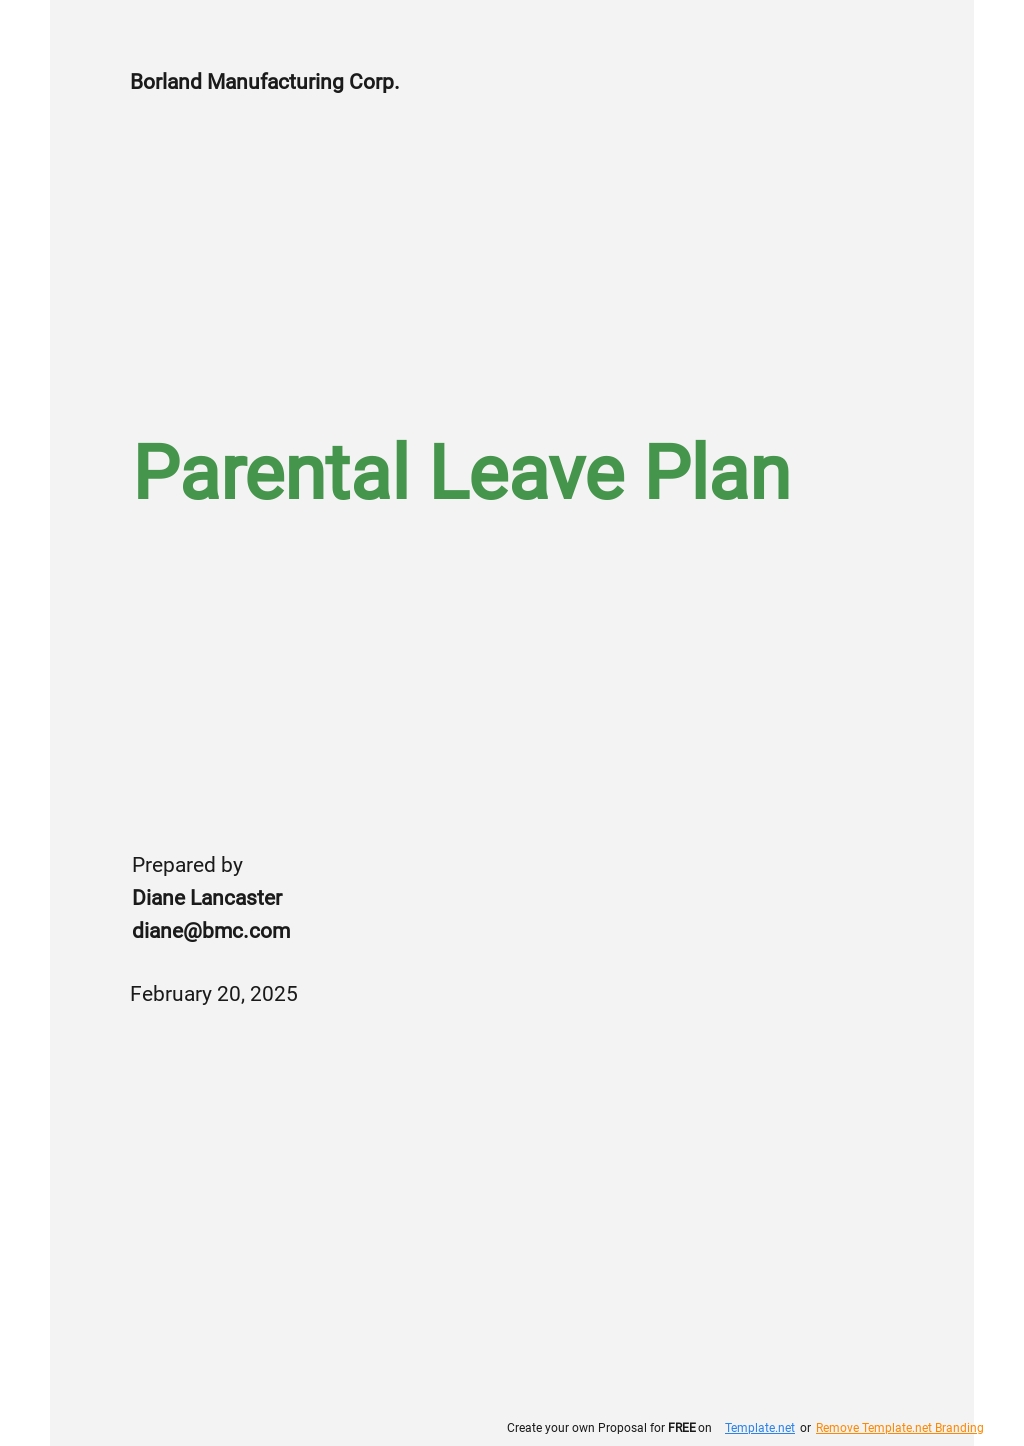 Parental Leave Plan Template